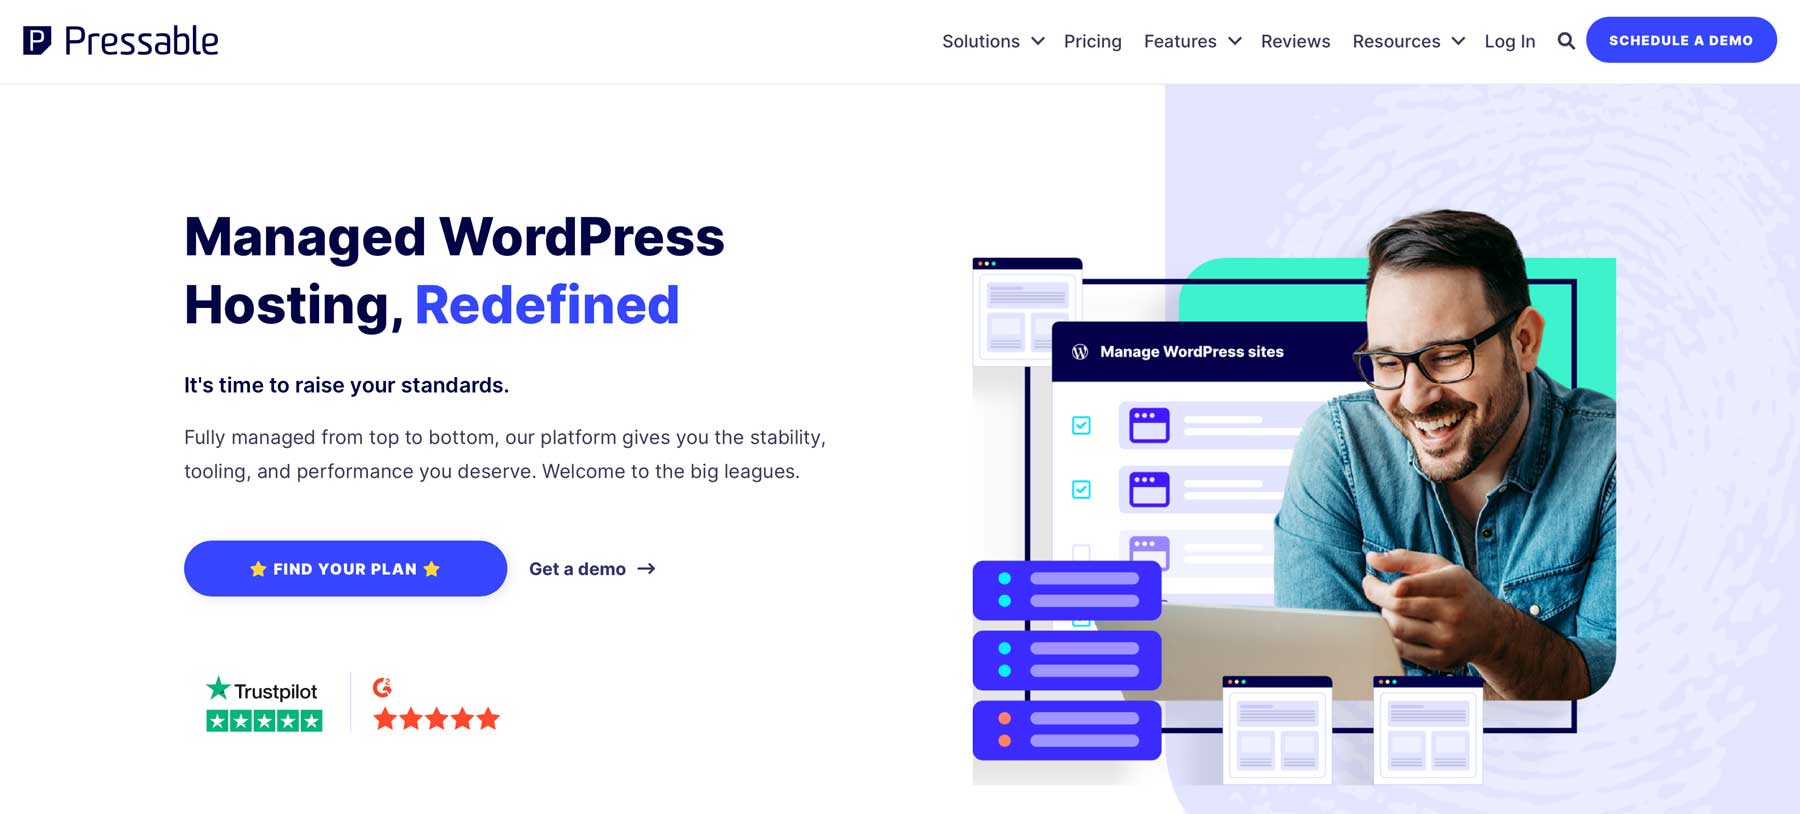 Pressable WordPress hosting